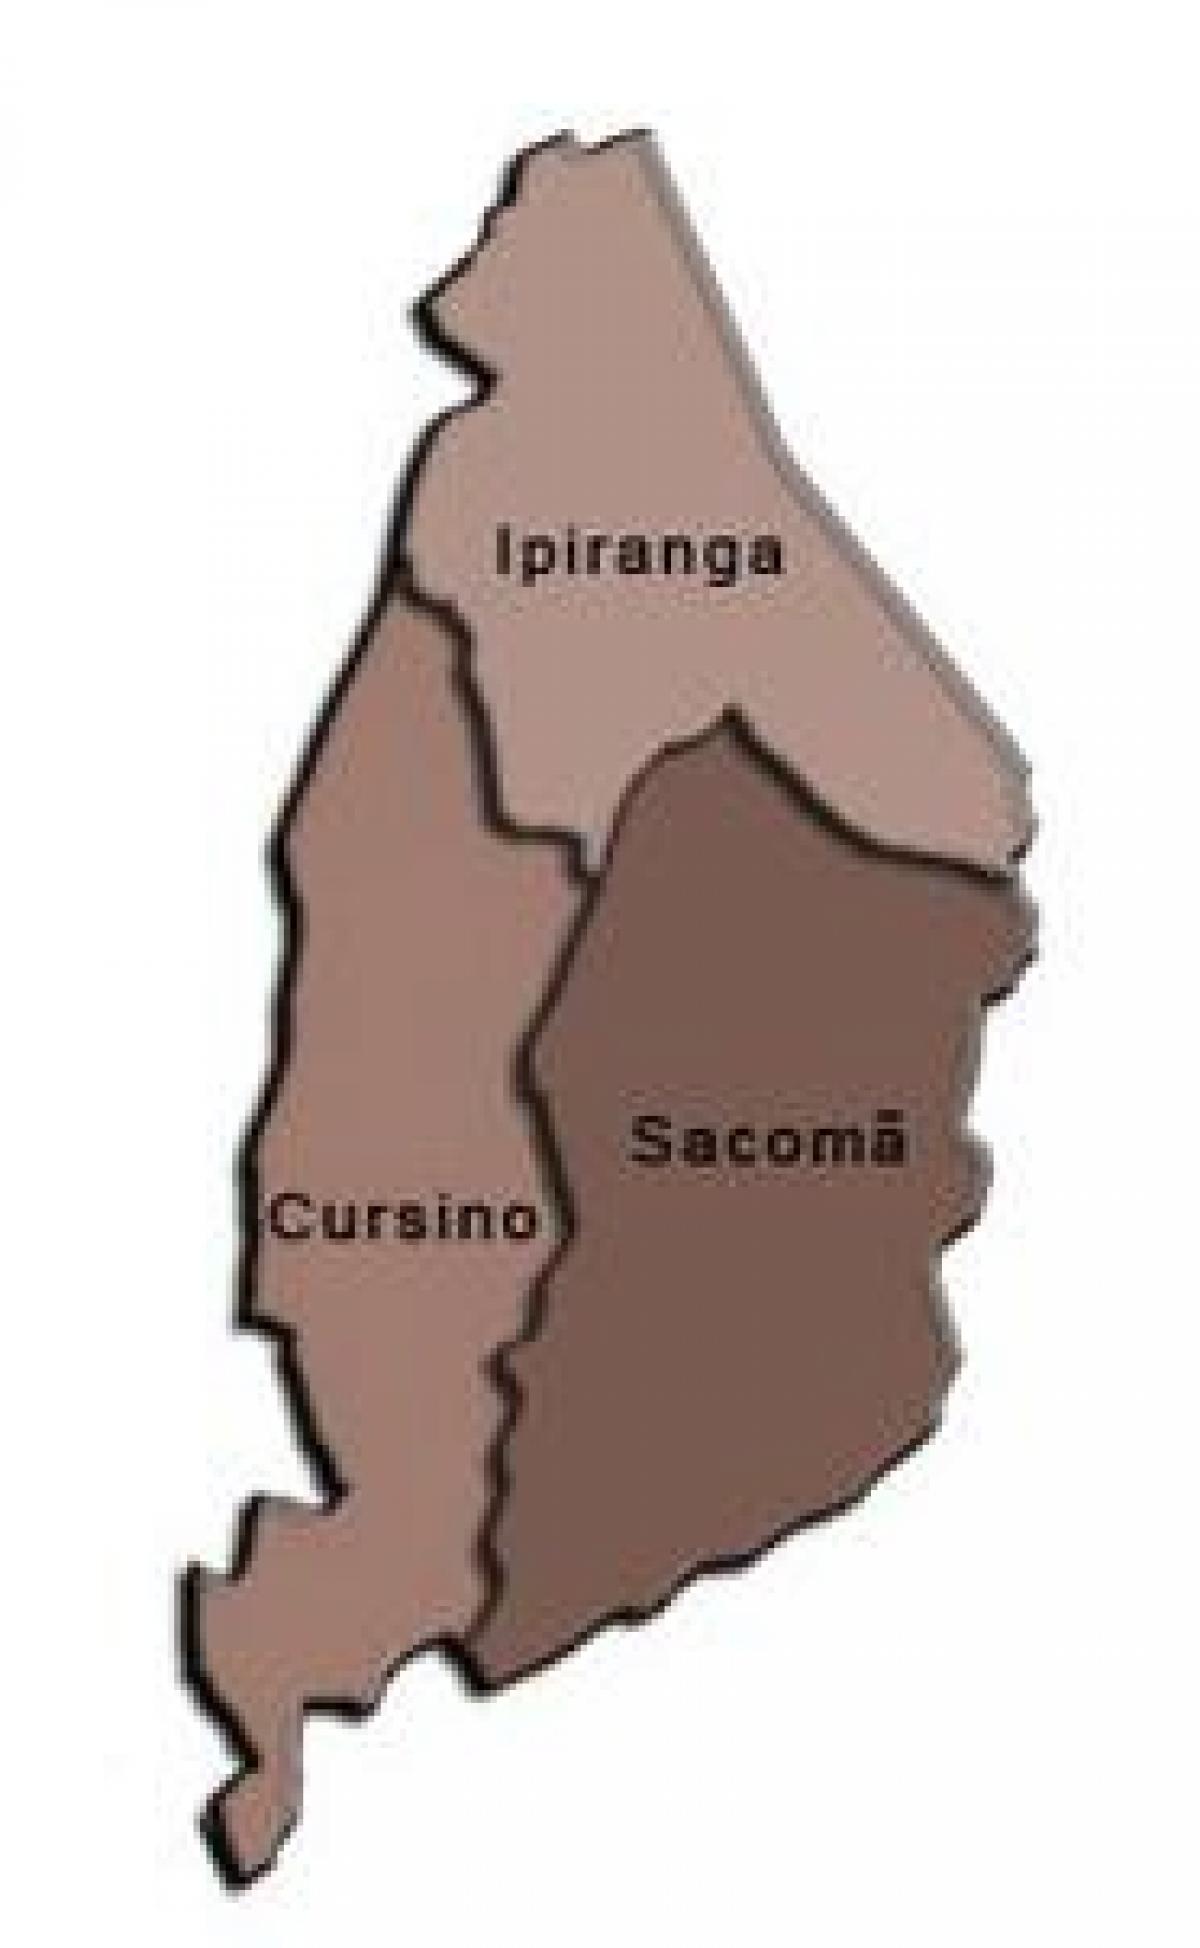 Peta dari Ipiranga sub-prefektur